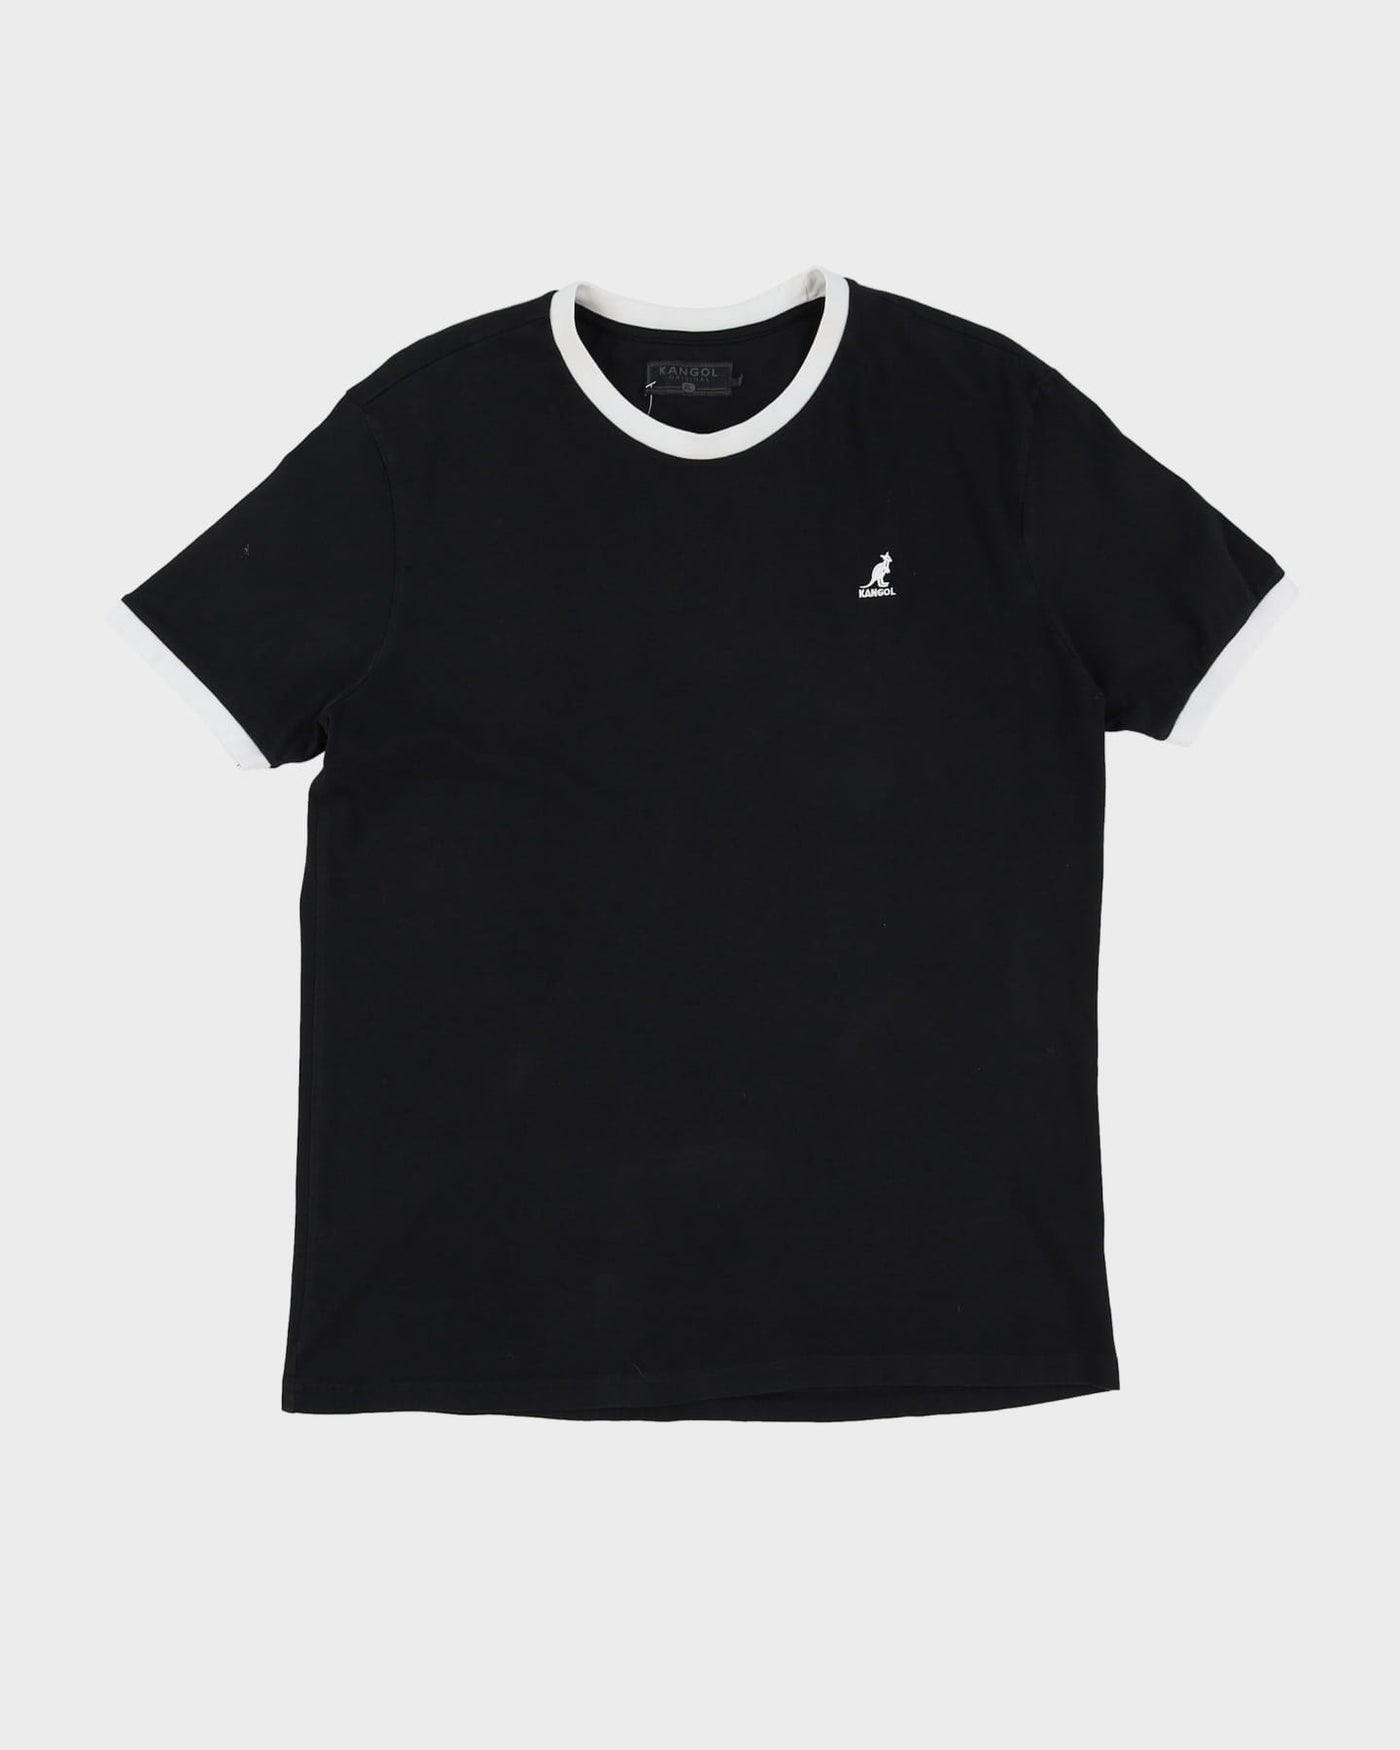 Kangol Black Ringer T-Shirt - XL